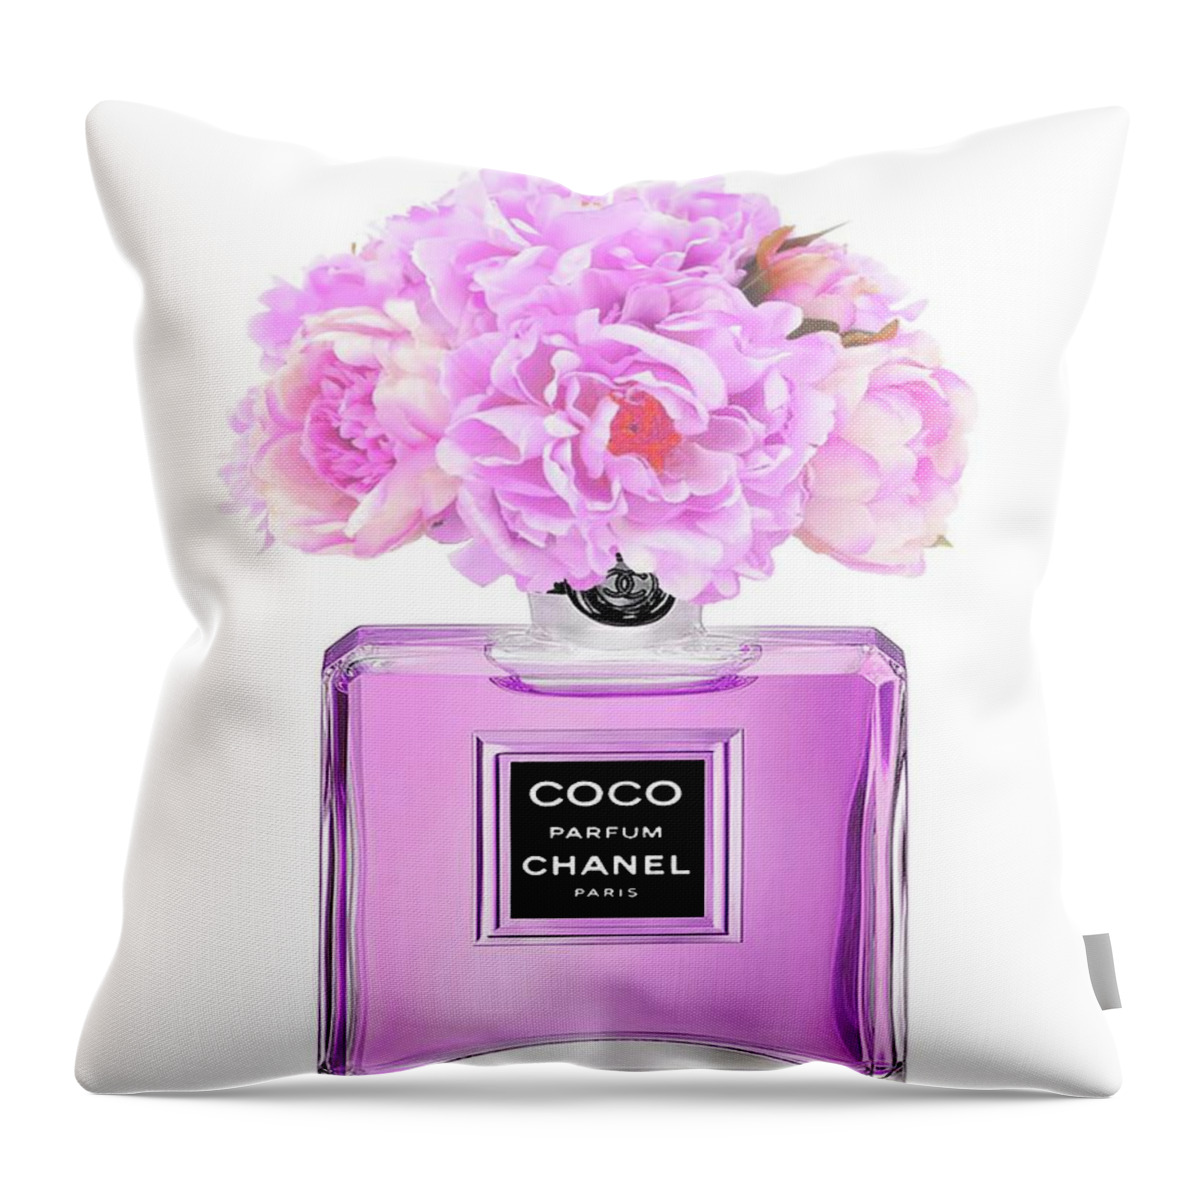 Warm and loving perfume bottle shape cushion pillow /creative gift